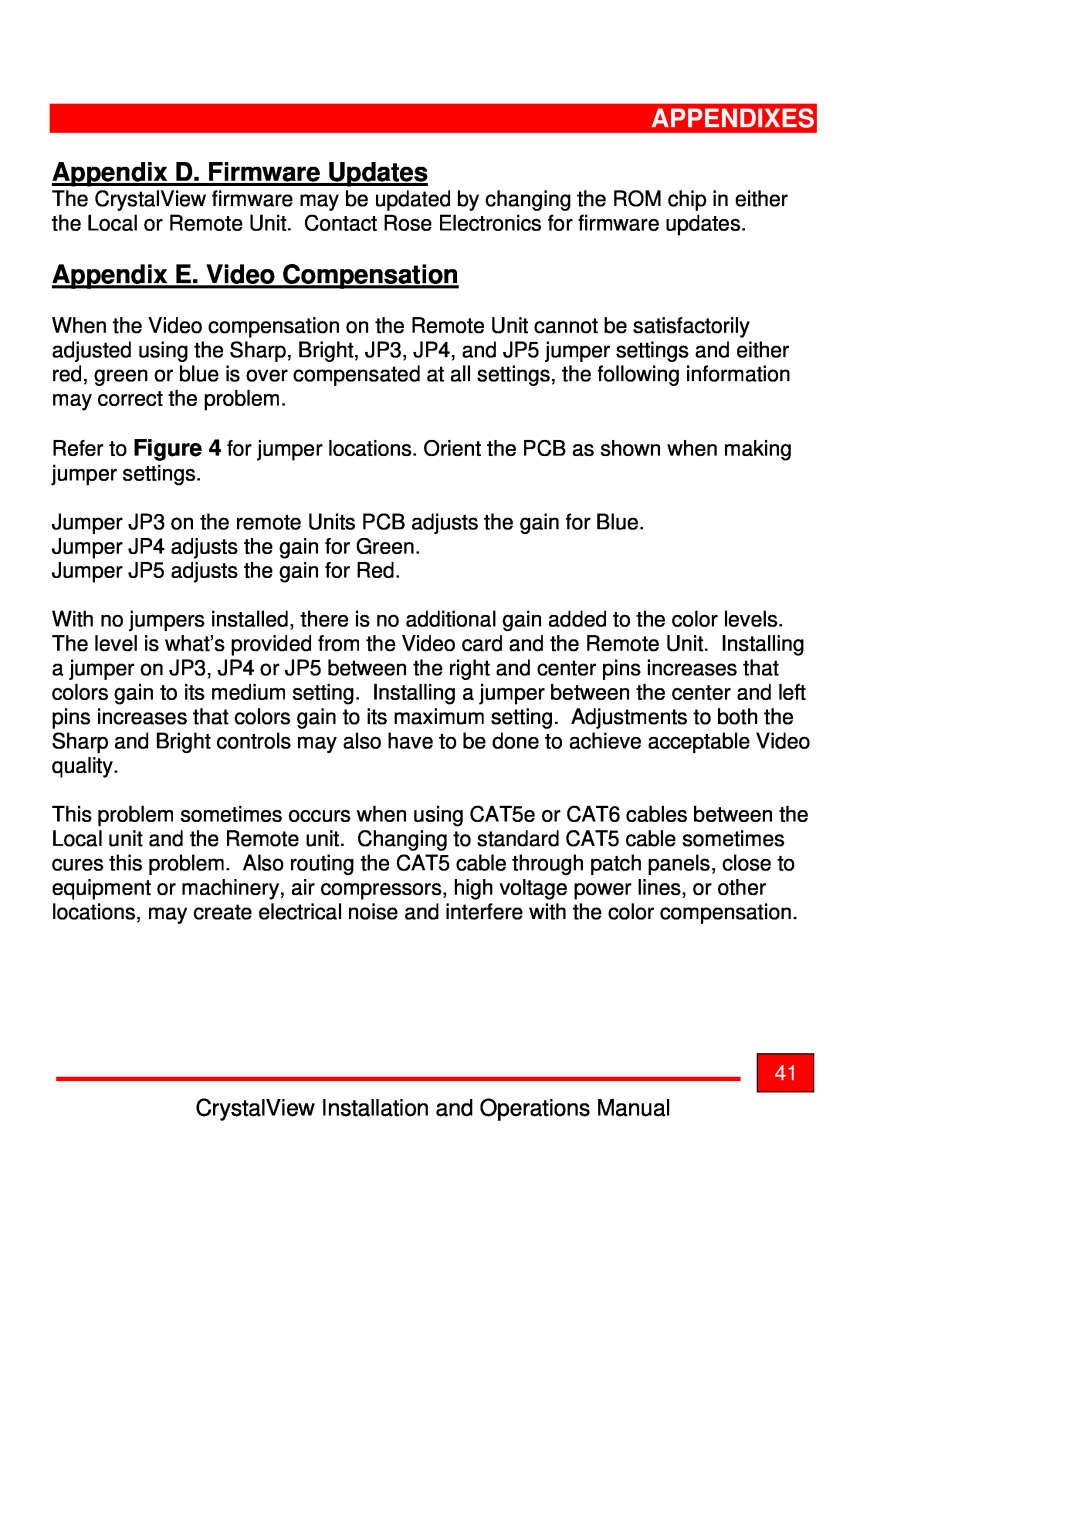 Rose electronic Crystal View operation manual Appendix D. Firmware Updates, Appendix E. Video Compensation, Appendixes 